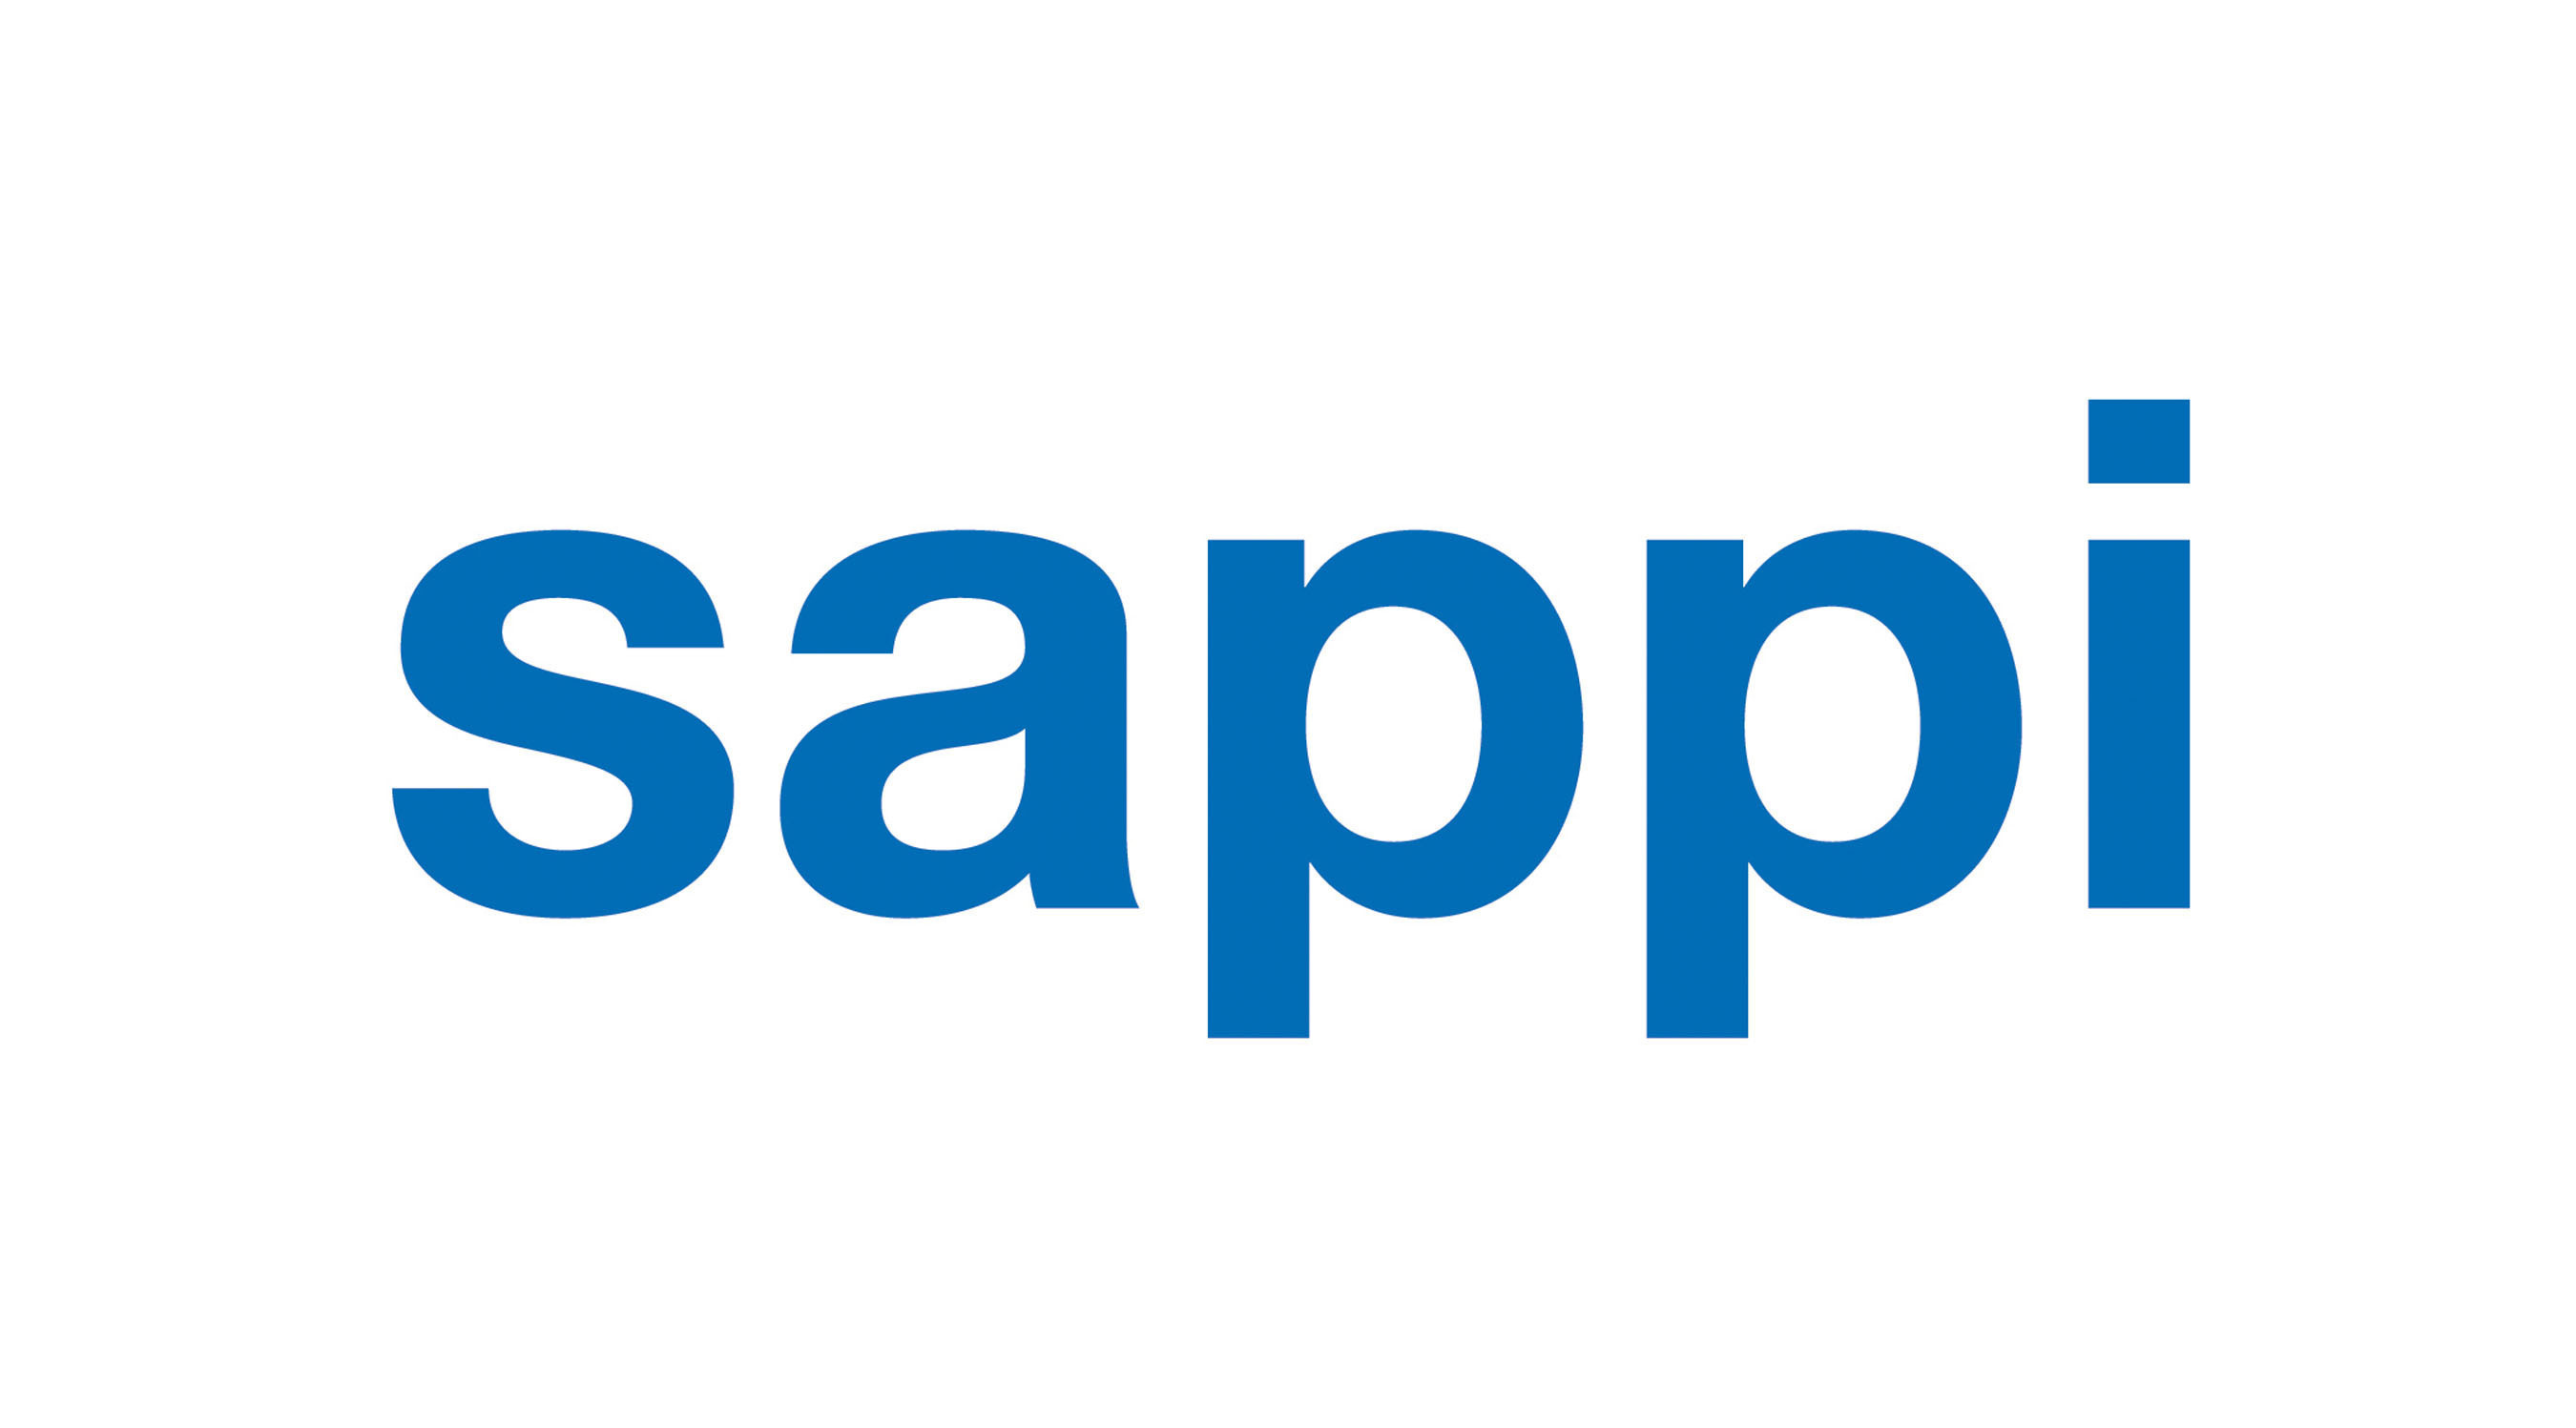 Sappi Brand Logo